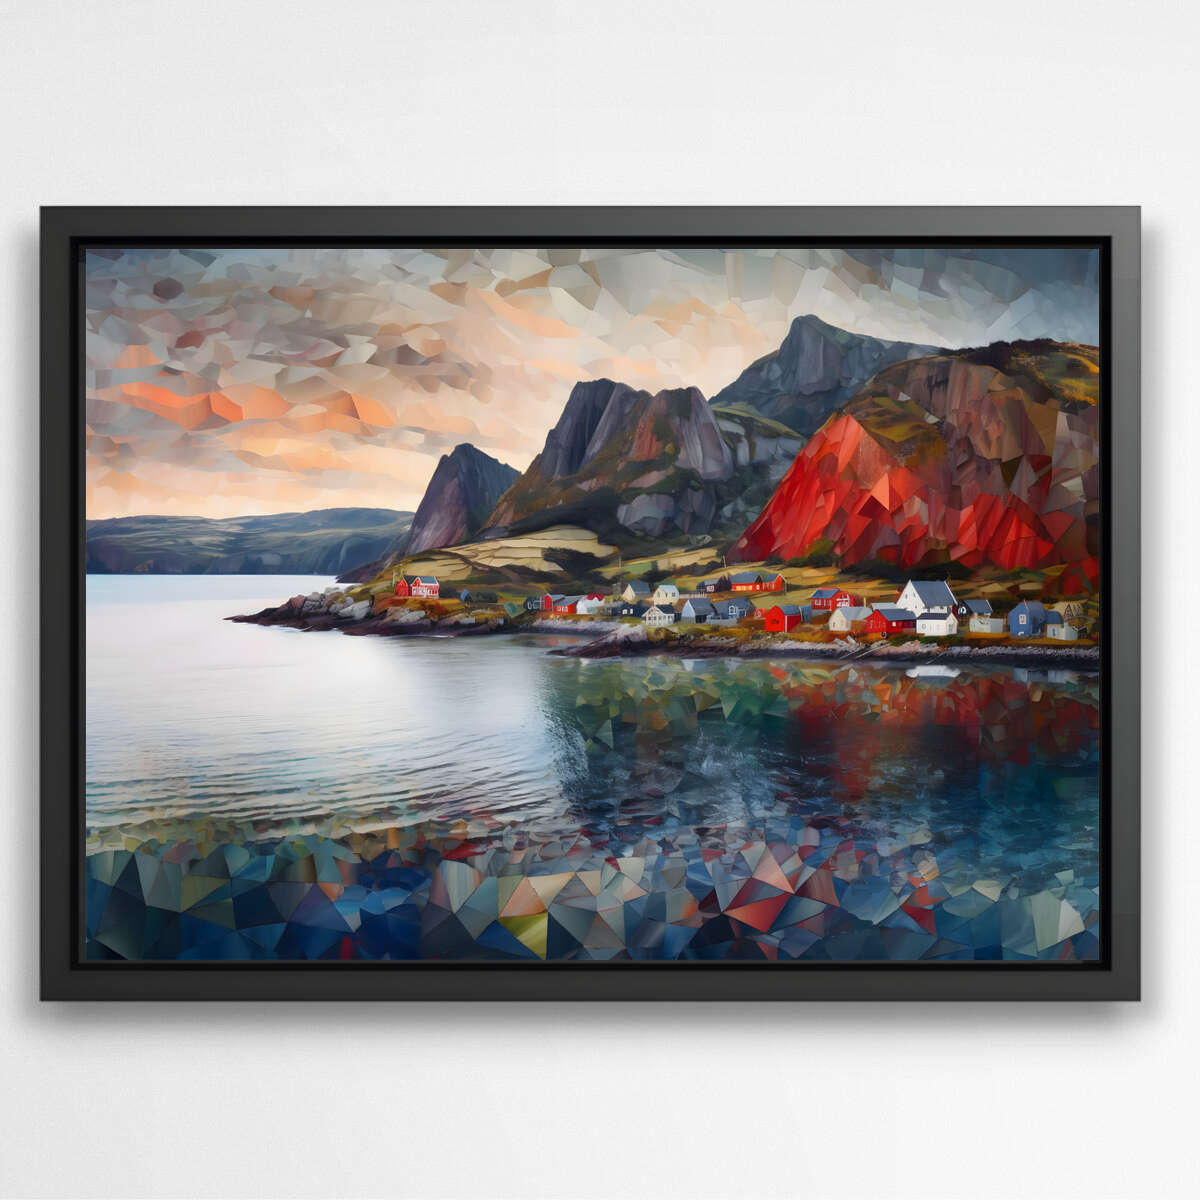 Reine in The Lofoten Islands | Destinations Wall Art Prints - The Canvas Hive